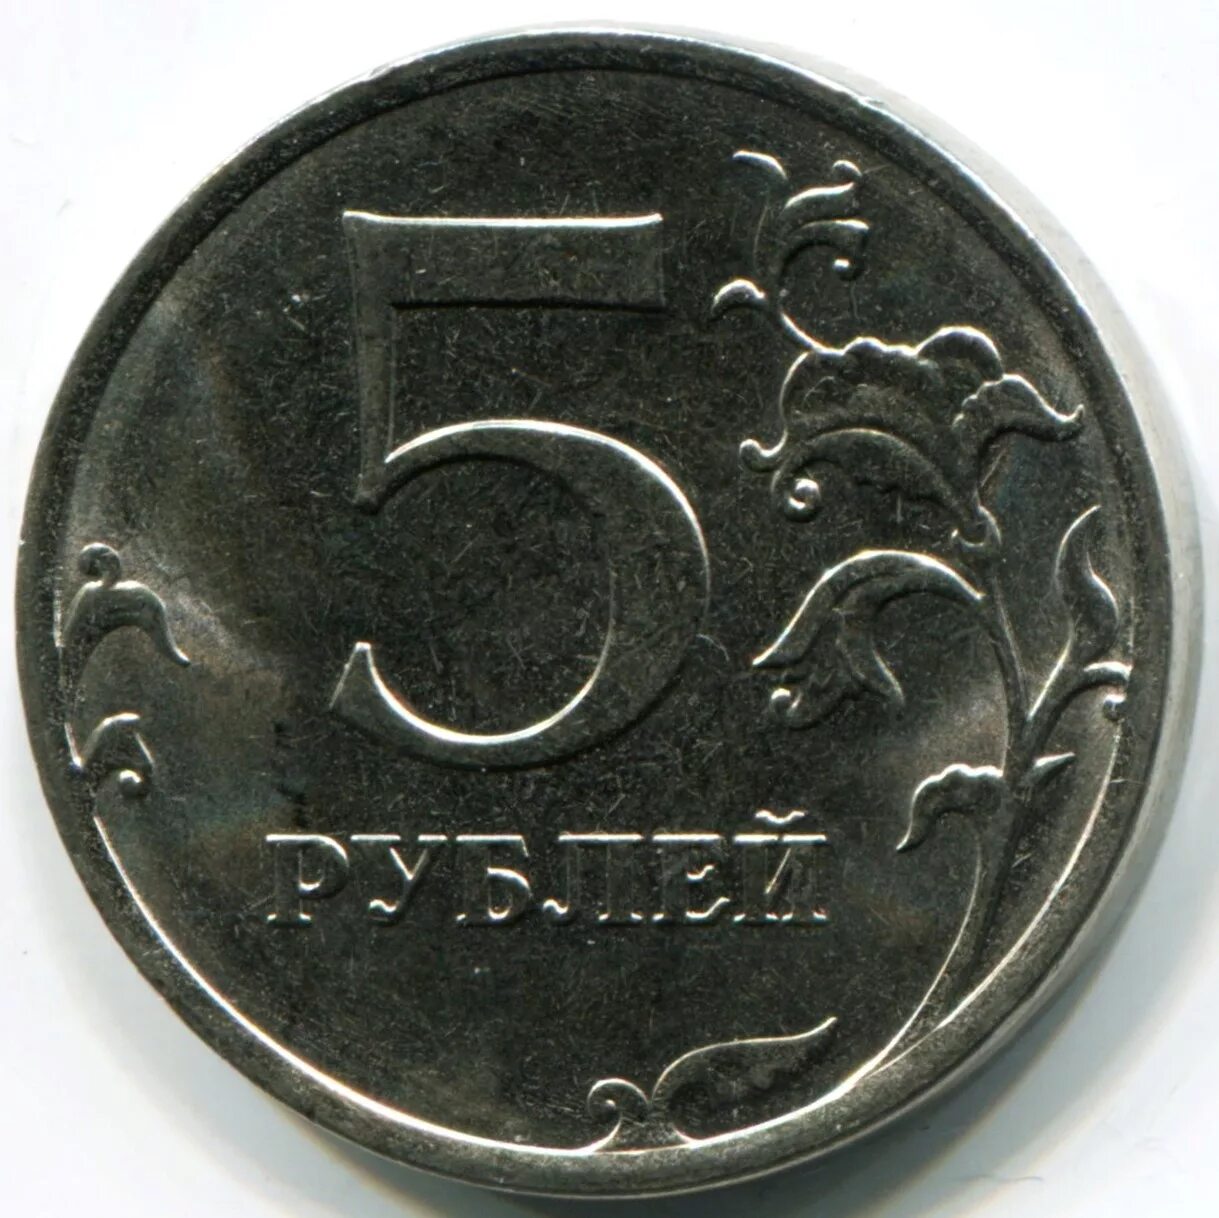 5 Рублей 1997 года СПМД И ММД. Монета 5 рублей. Диаметр 5 рублевой монеты. Пять рублей. 5 рублей 16 года